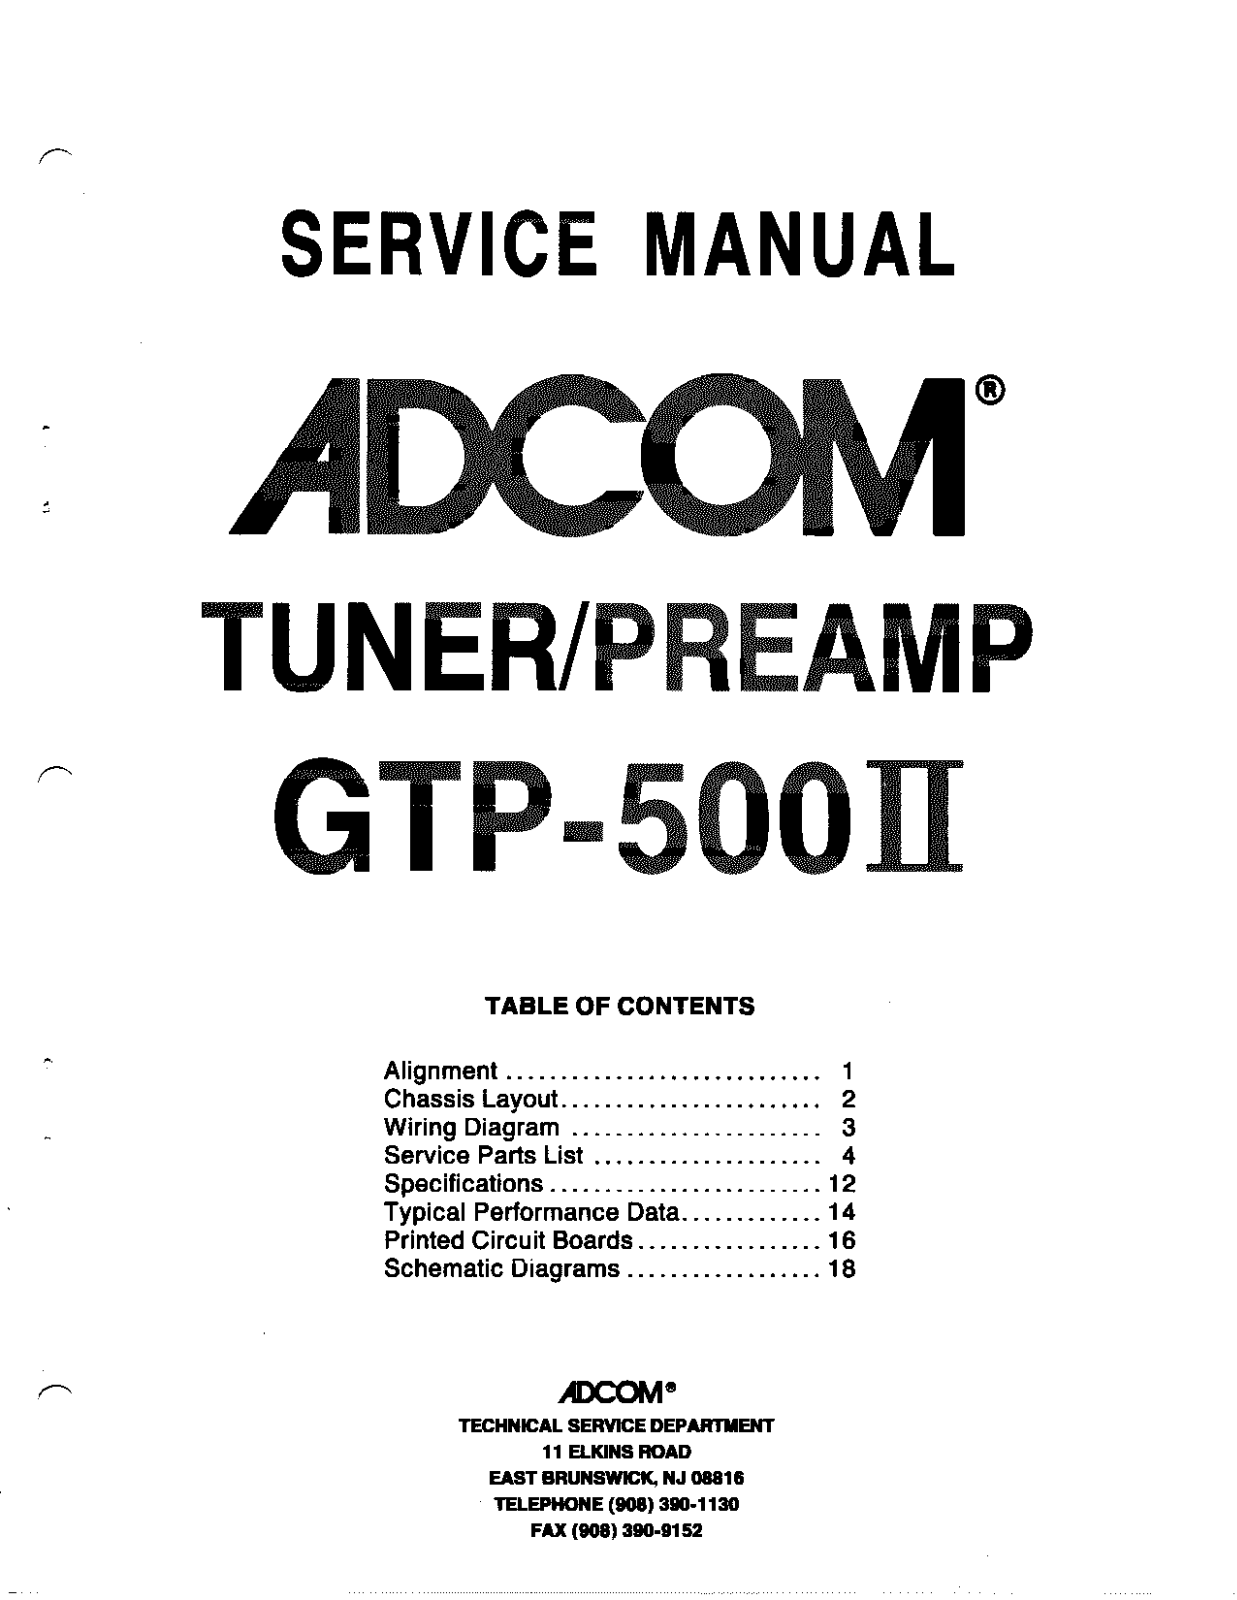 Adcom GTP-500-II Service Manual